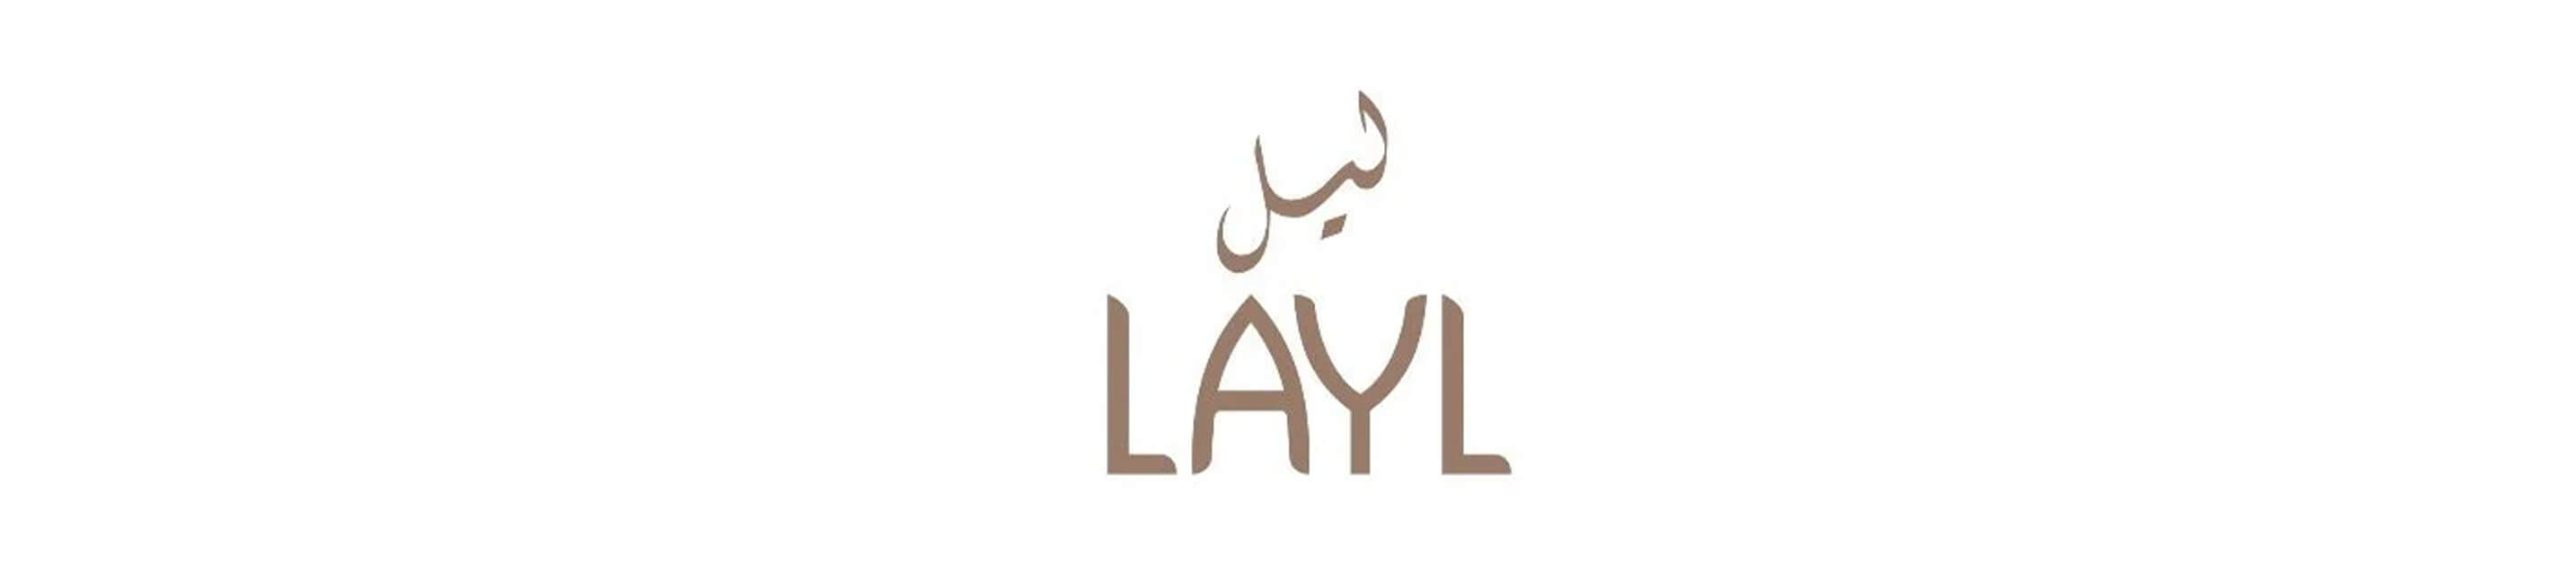 Layl